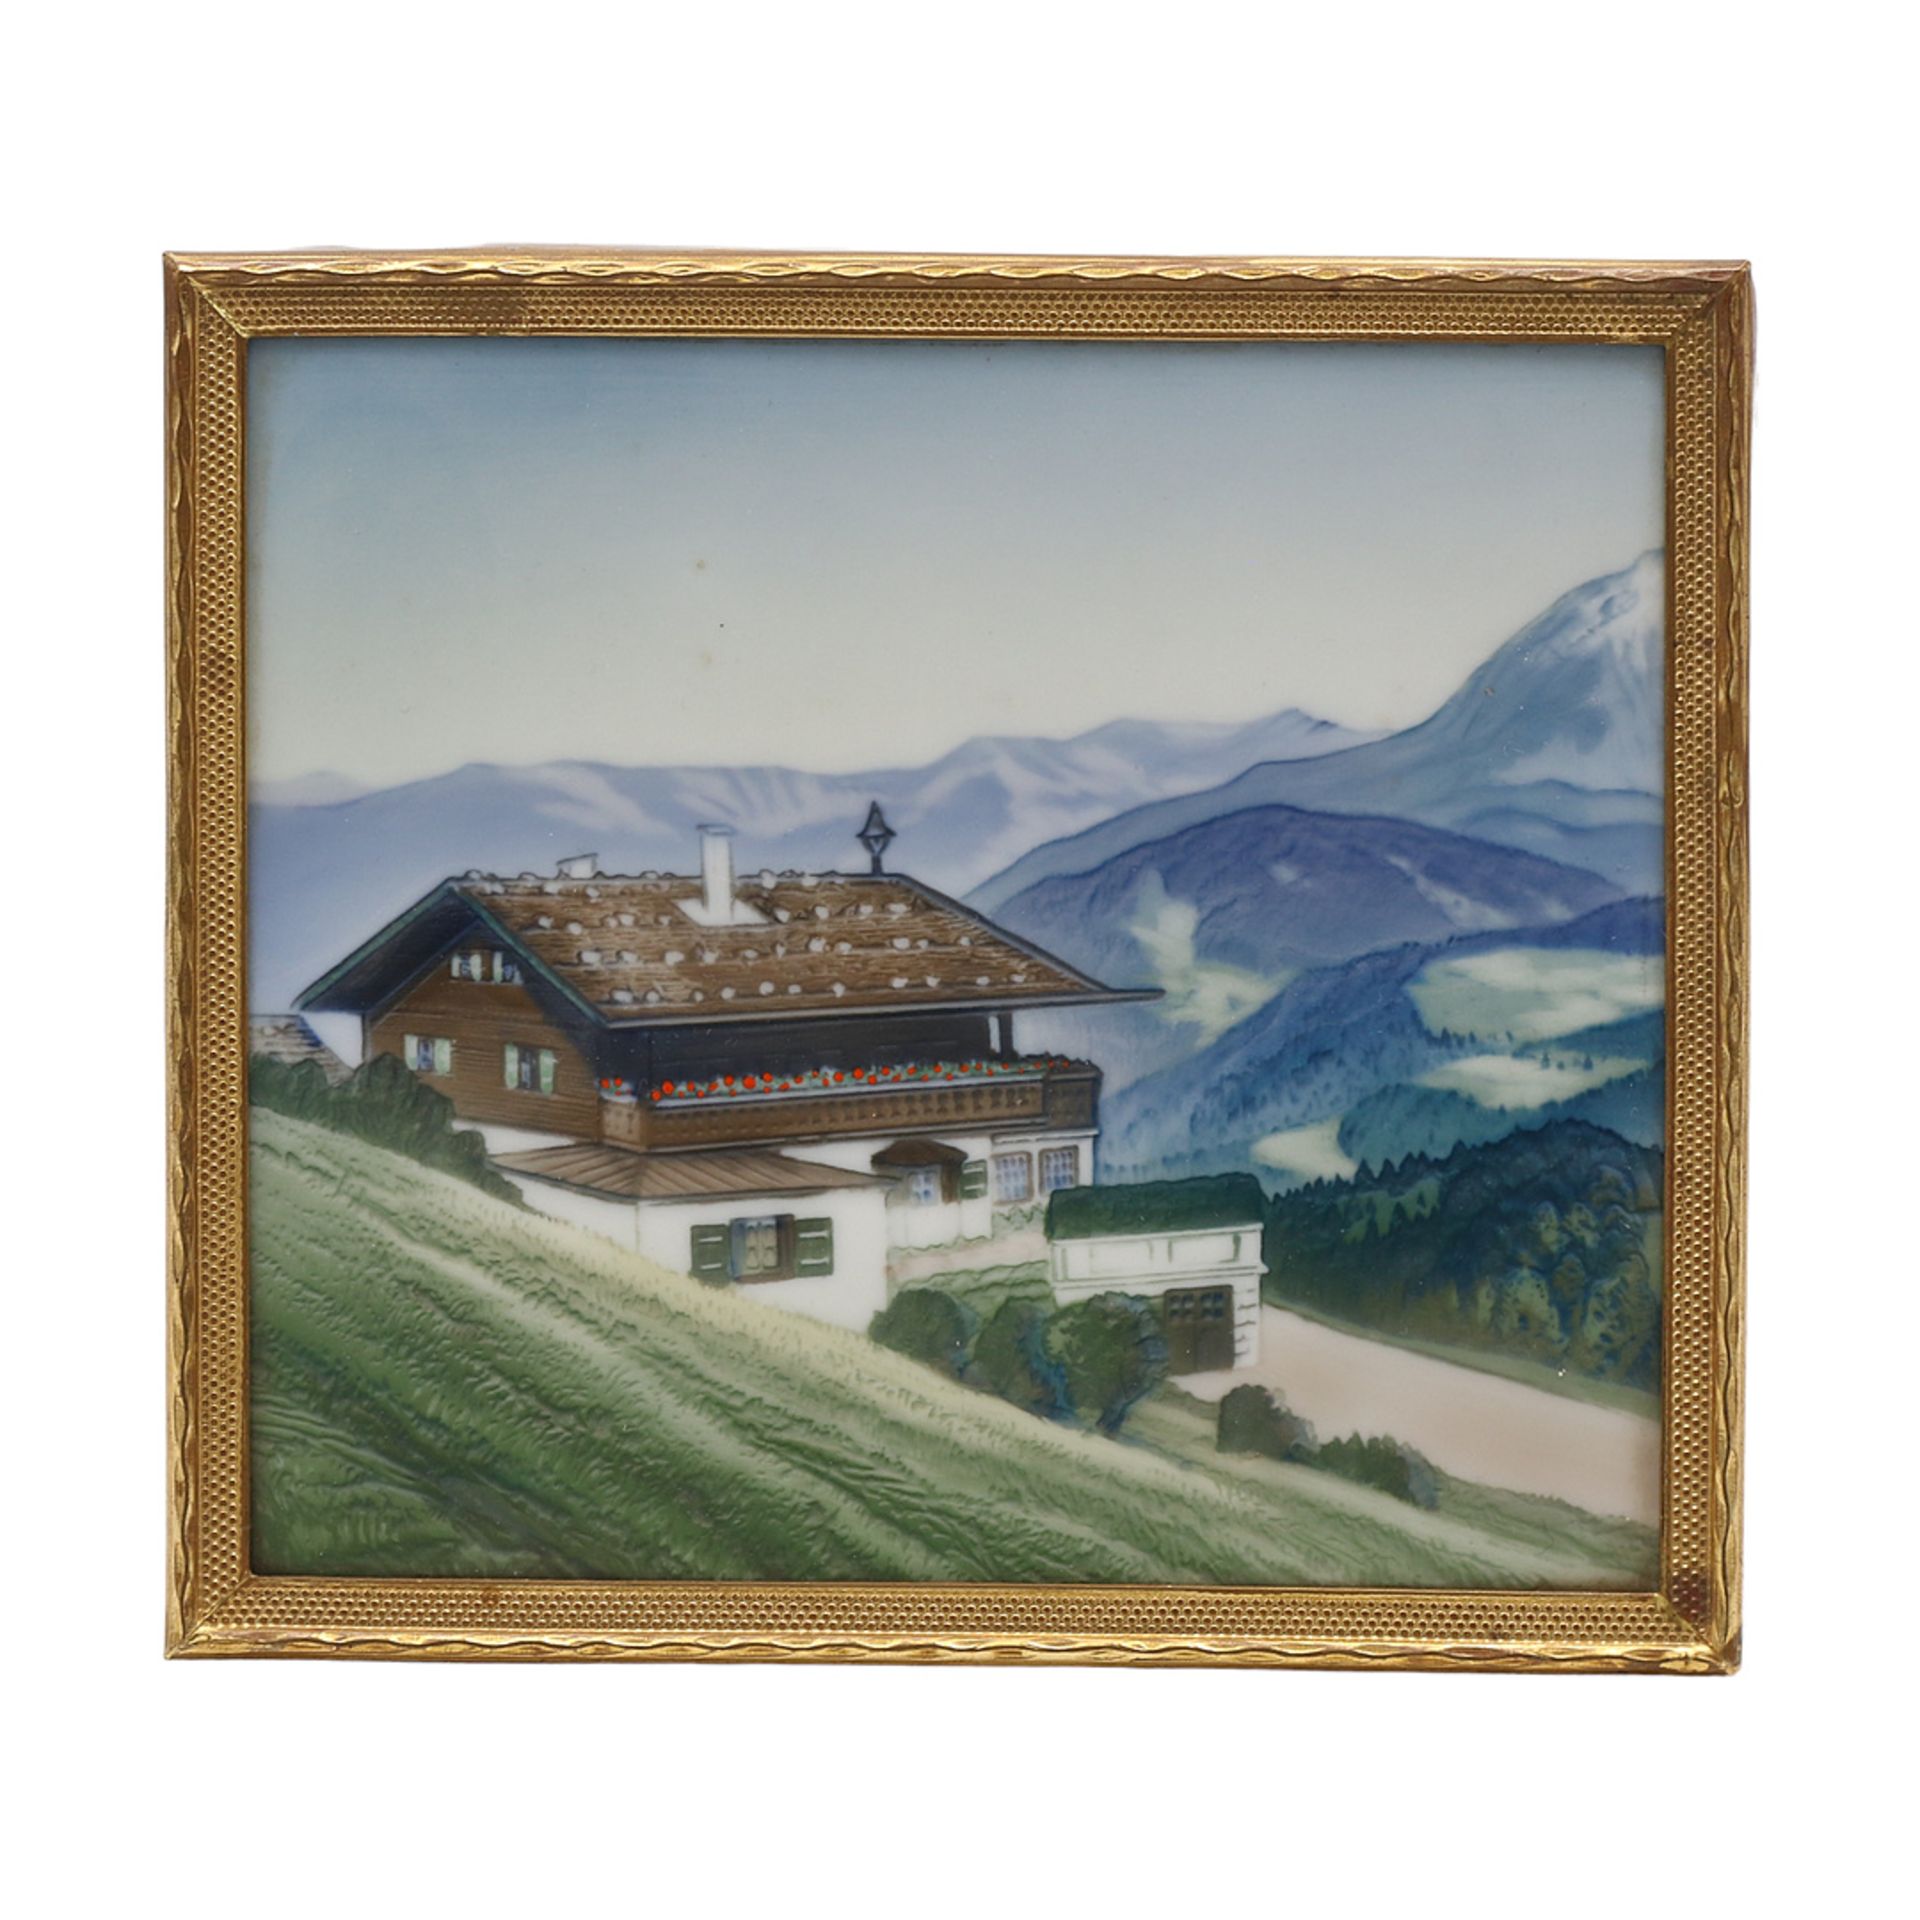 Rosenthal Porzellanbildplatte "Haus Wachenfeld" (Berghof / eagels nest)